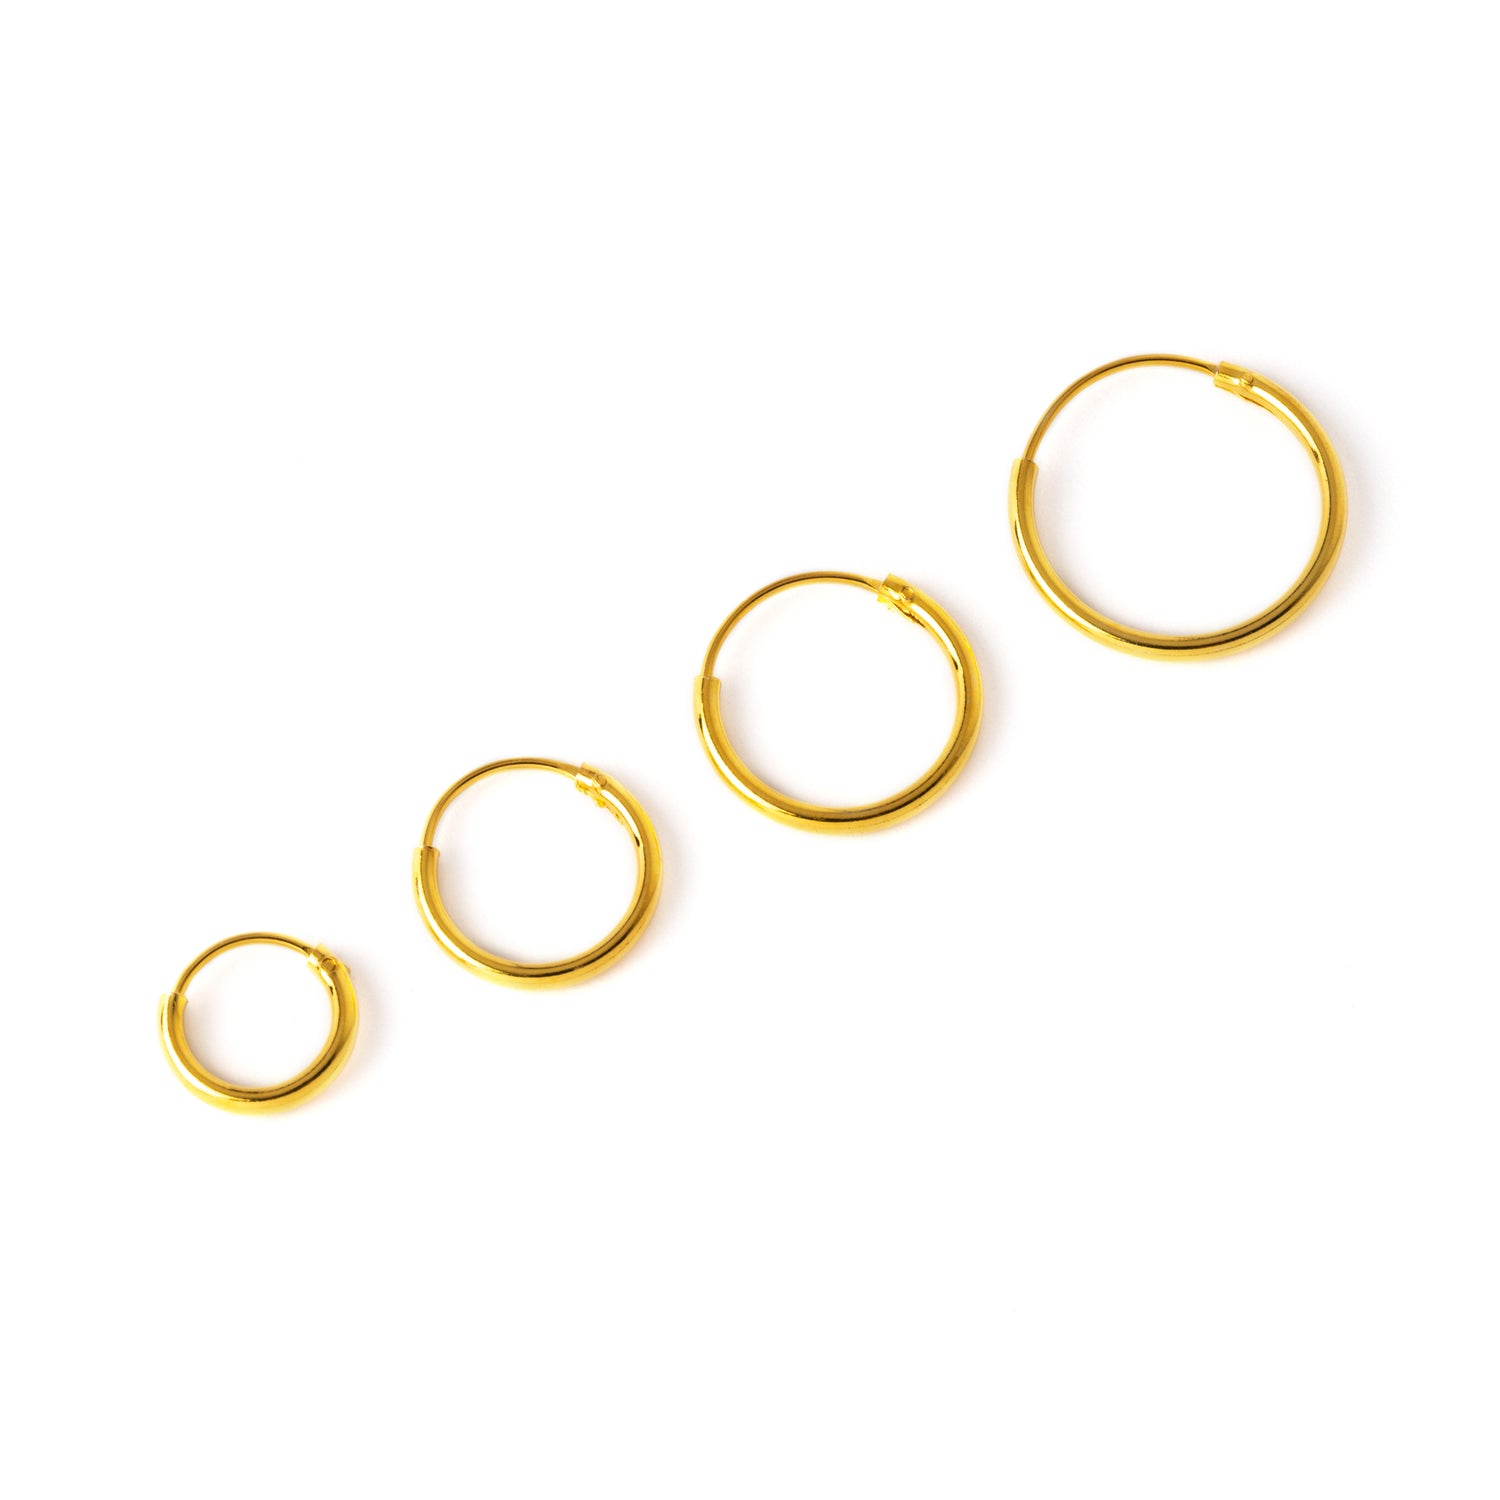 Gold-thin-hoop-earrings58mm, 10mm, 12mm, 14mm Gold thin hoop earrings